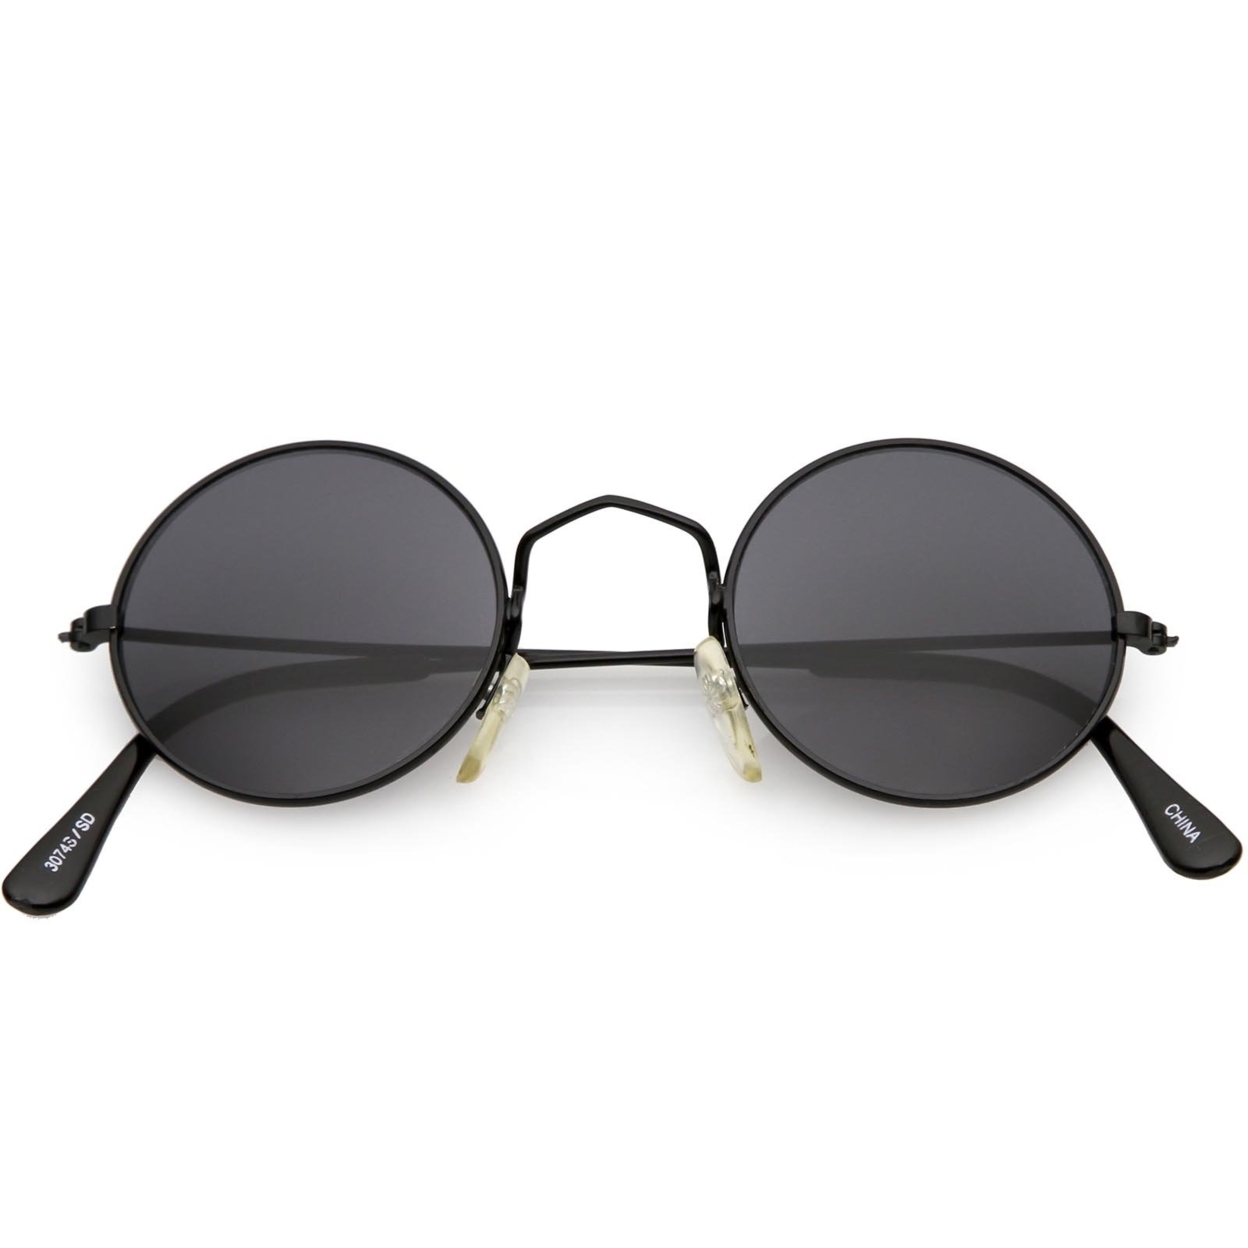 True Vintage Small Thin Frame Circle Sunglasses Neutral Colored Lens 42mm - Black / Smoke